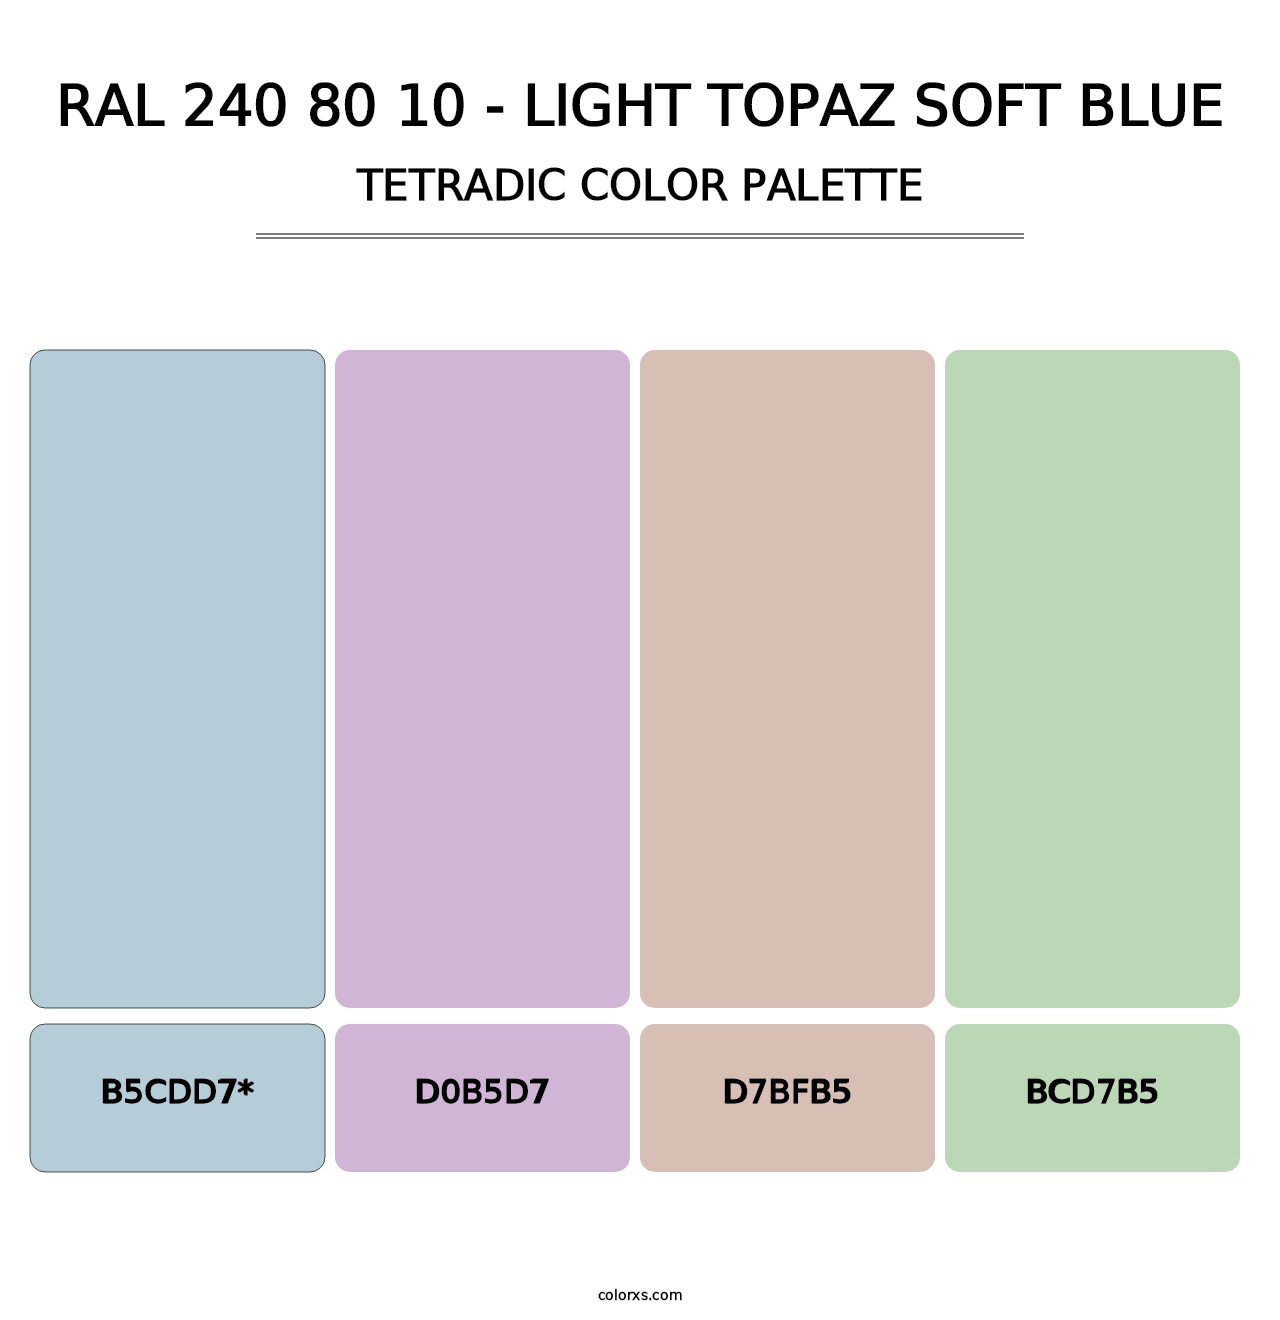 RAL 240 80 10 - Light Topaz Soft Blue - Tetradic Color Palette